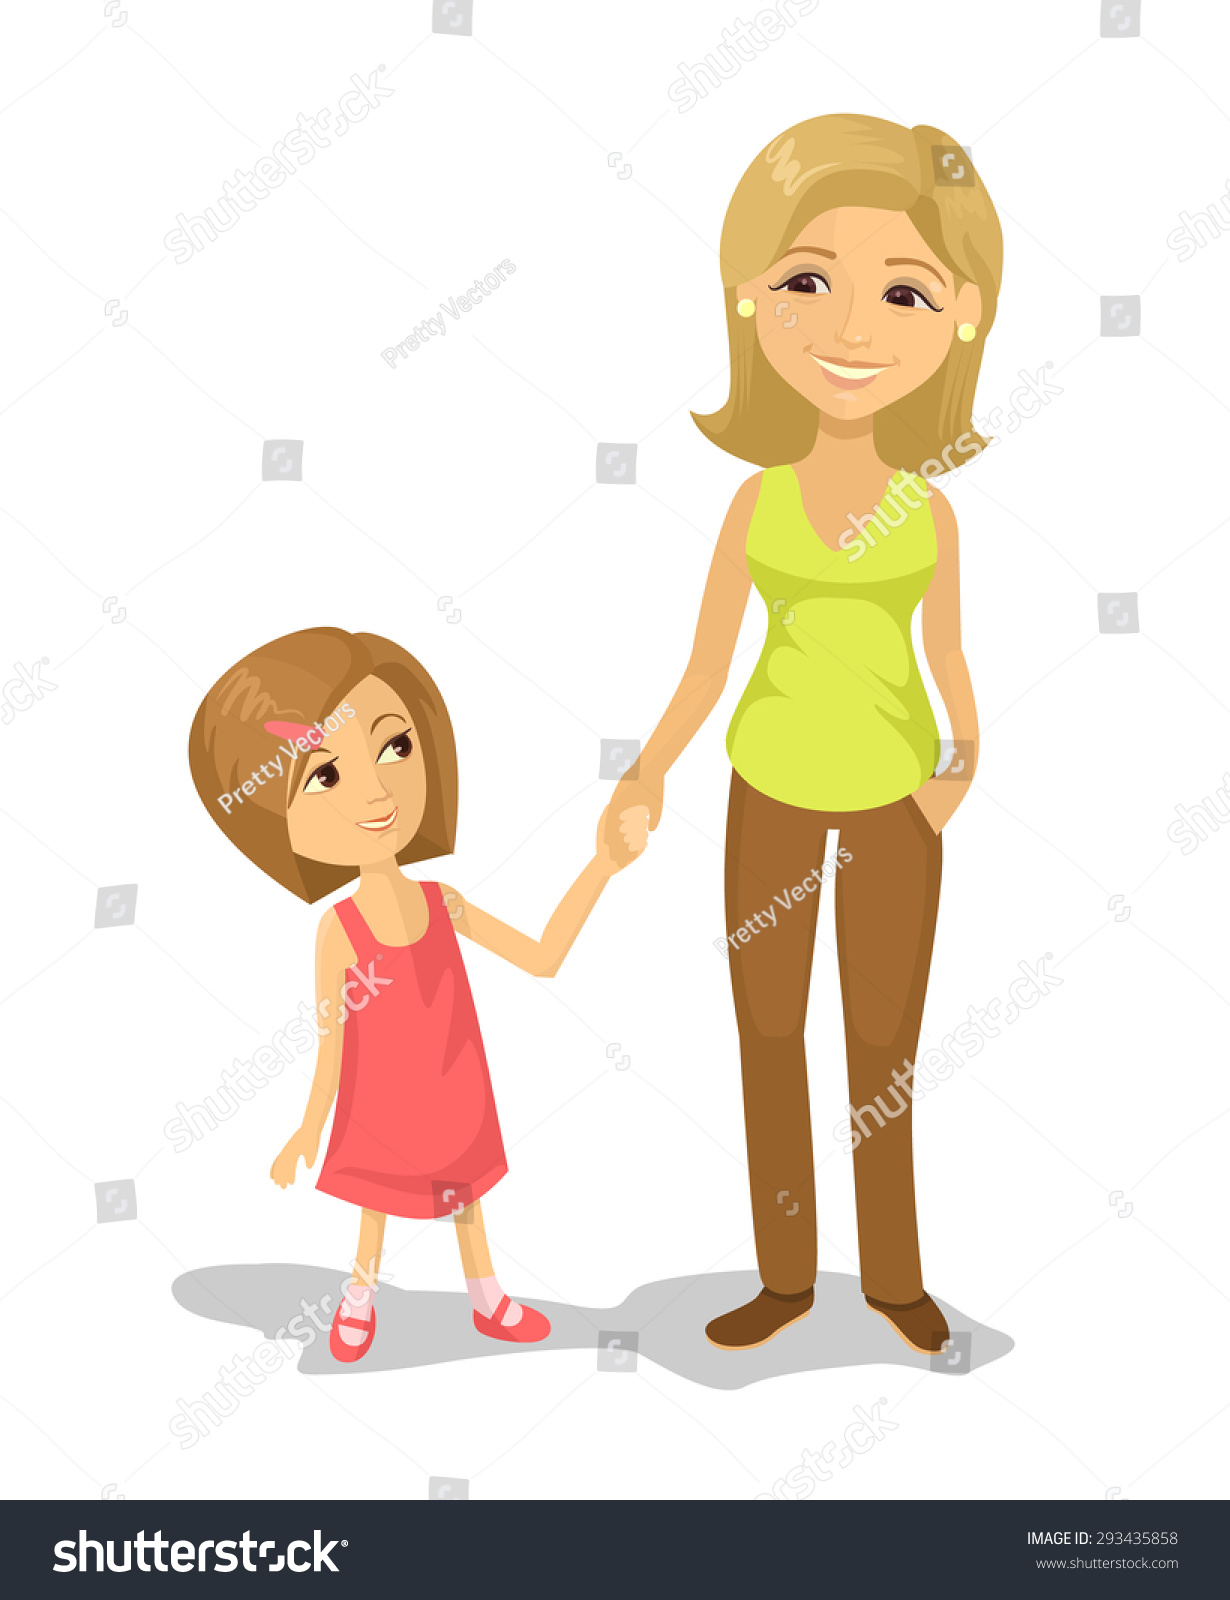 Mom And Daughter. Vector Flat Illustration - 293435858 : Shutterstock